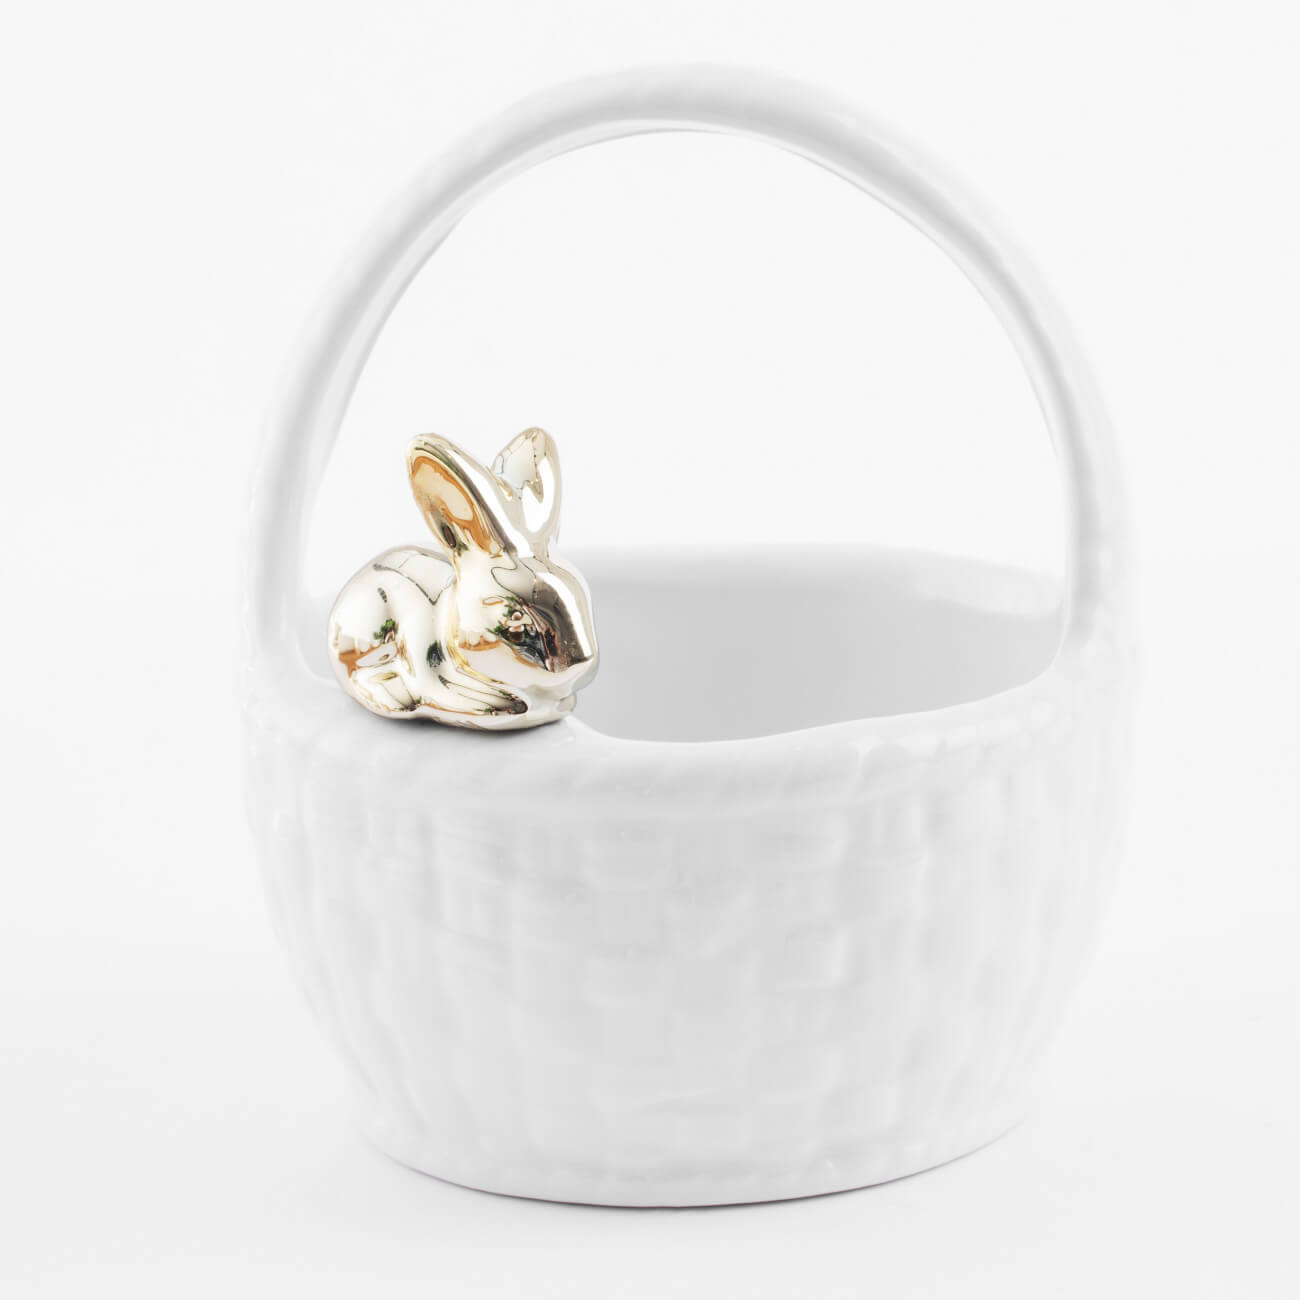 Конфетница, 12х14 см, с ручкой, керамика, белая, Кролик на корзине, Easter gold конфетница 18x14 см с ручкой керамика молочная кролики в корзине natural easter